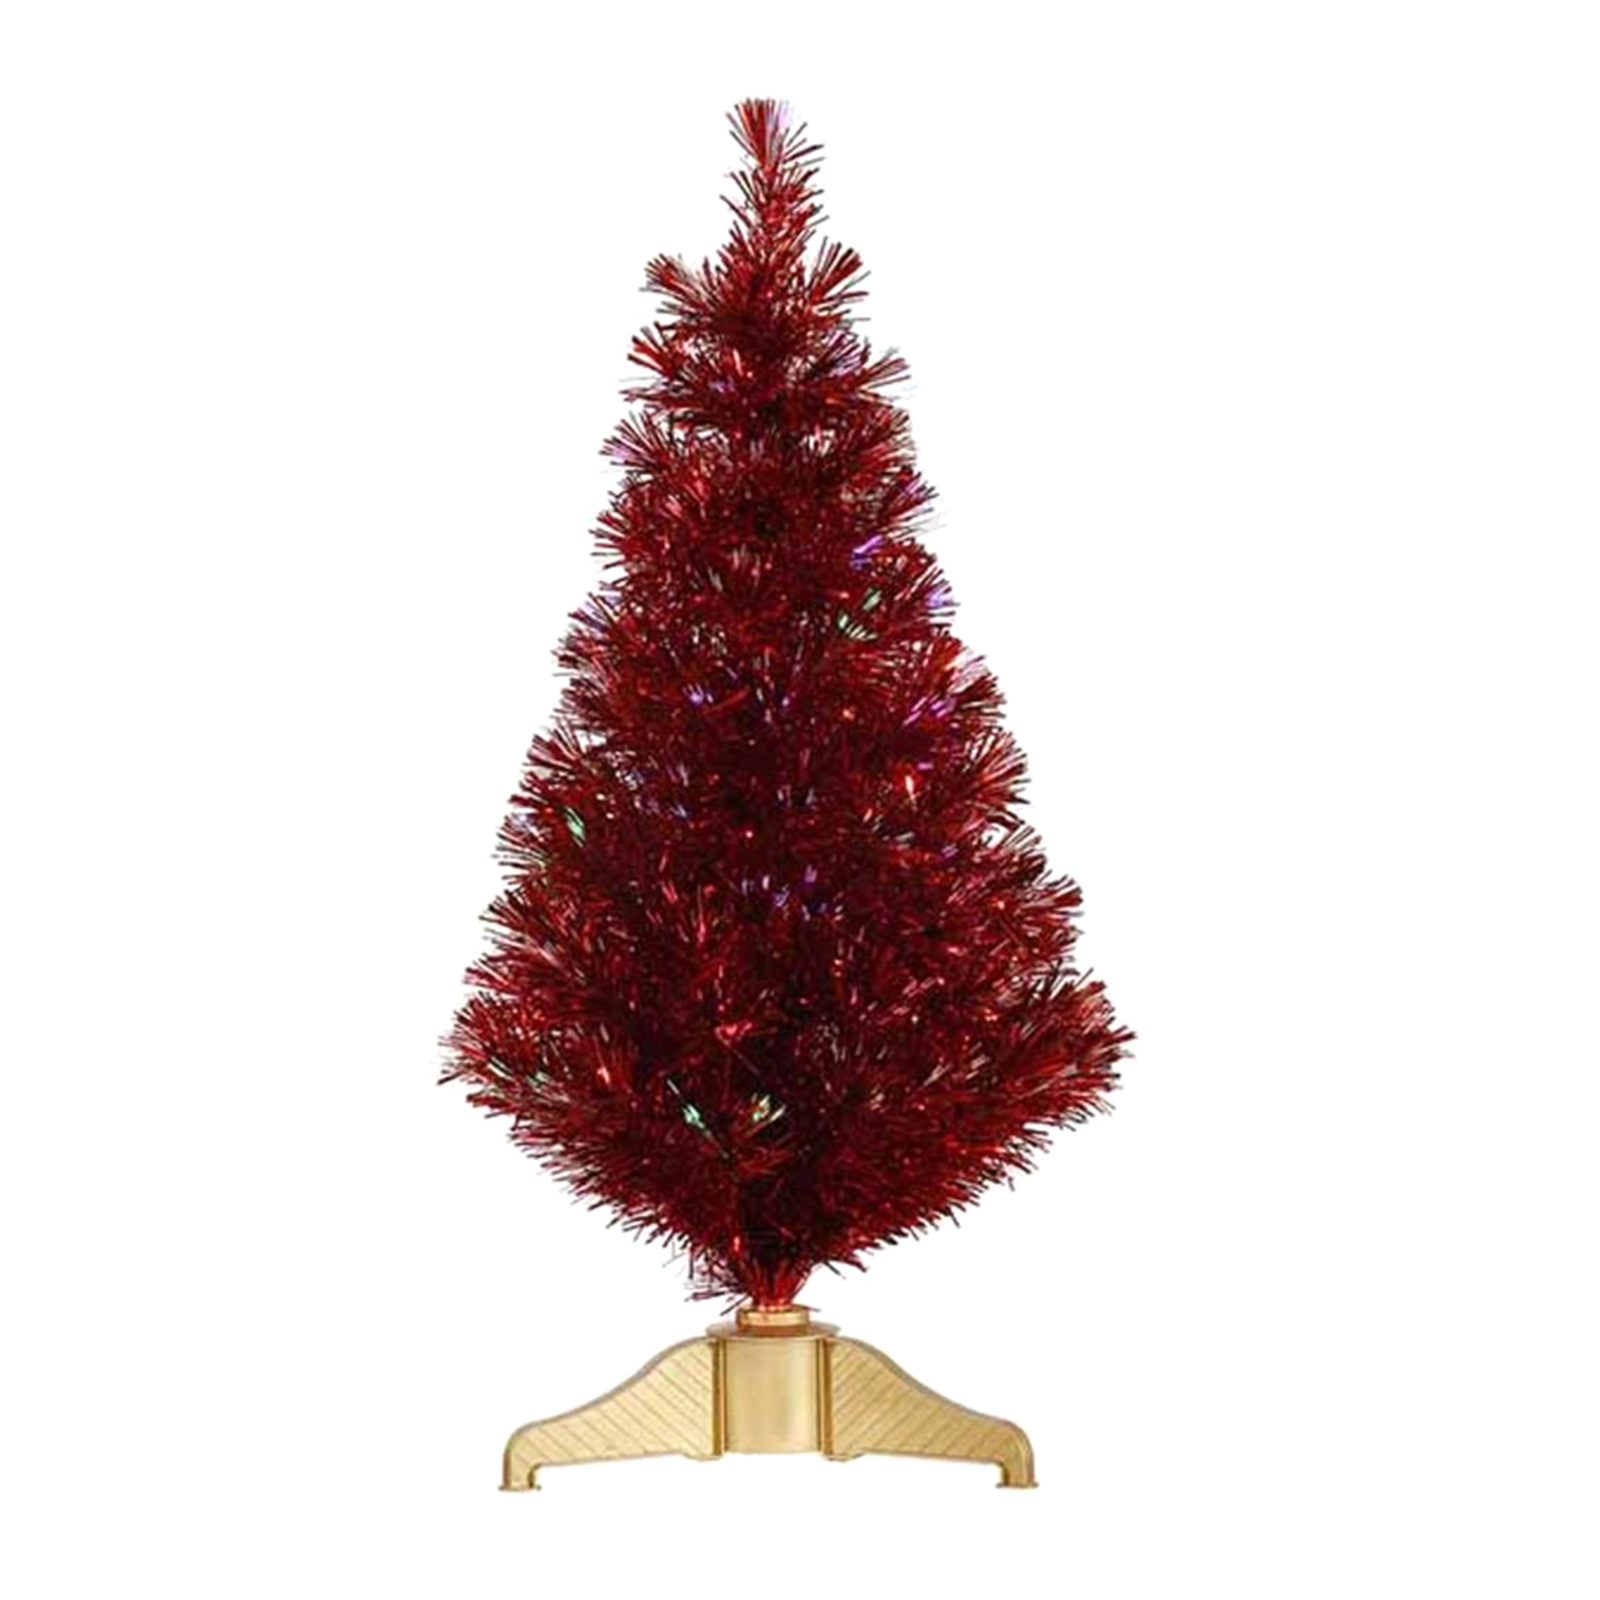 Vickerman 3' Pre-Lit Fiber Optic Tinsel Tree with Multi-Color Lights - Red Hot